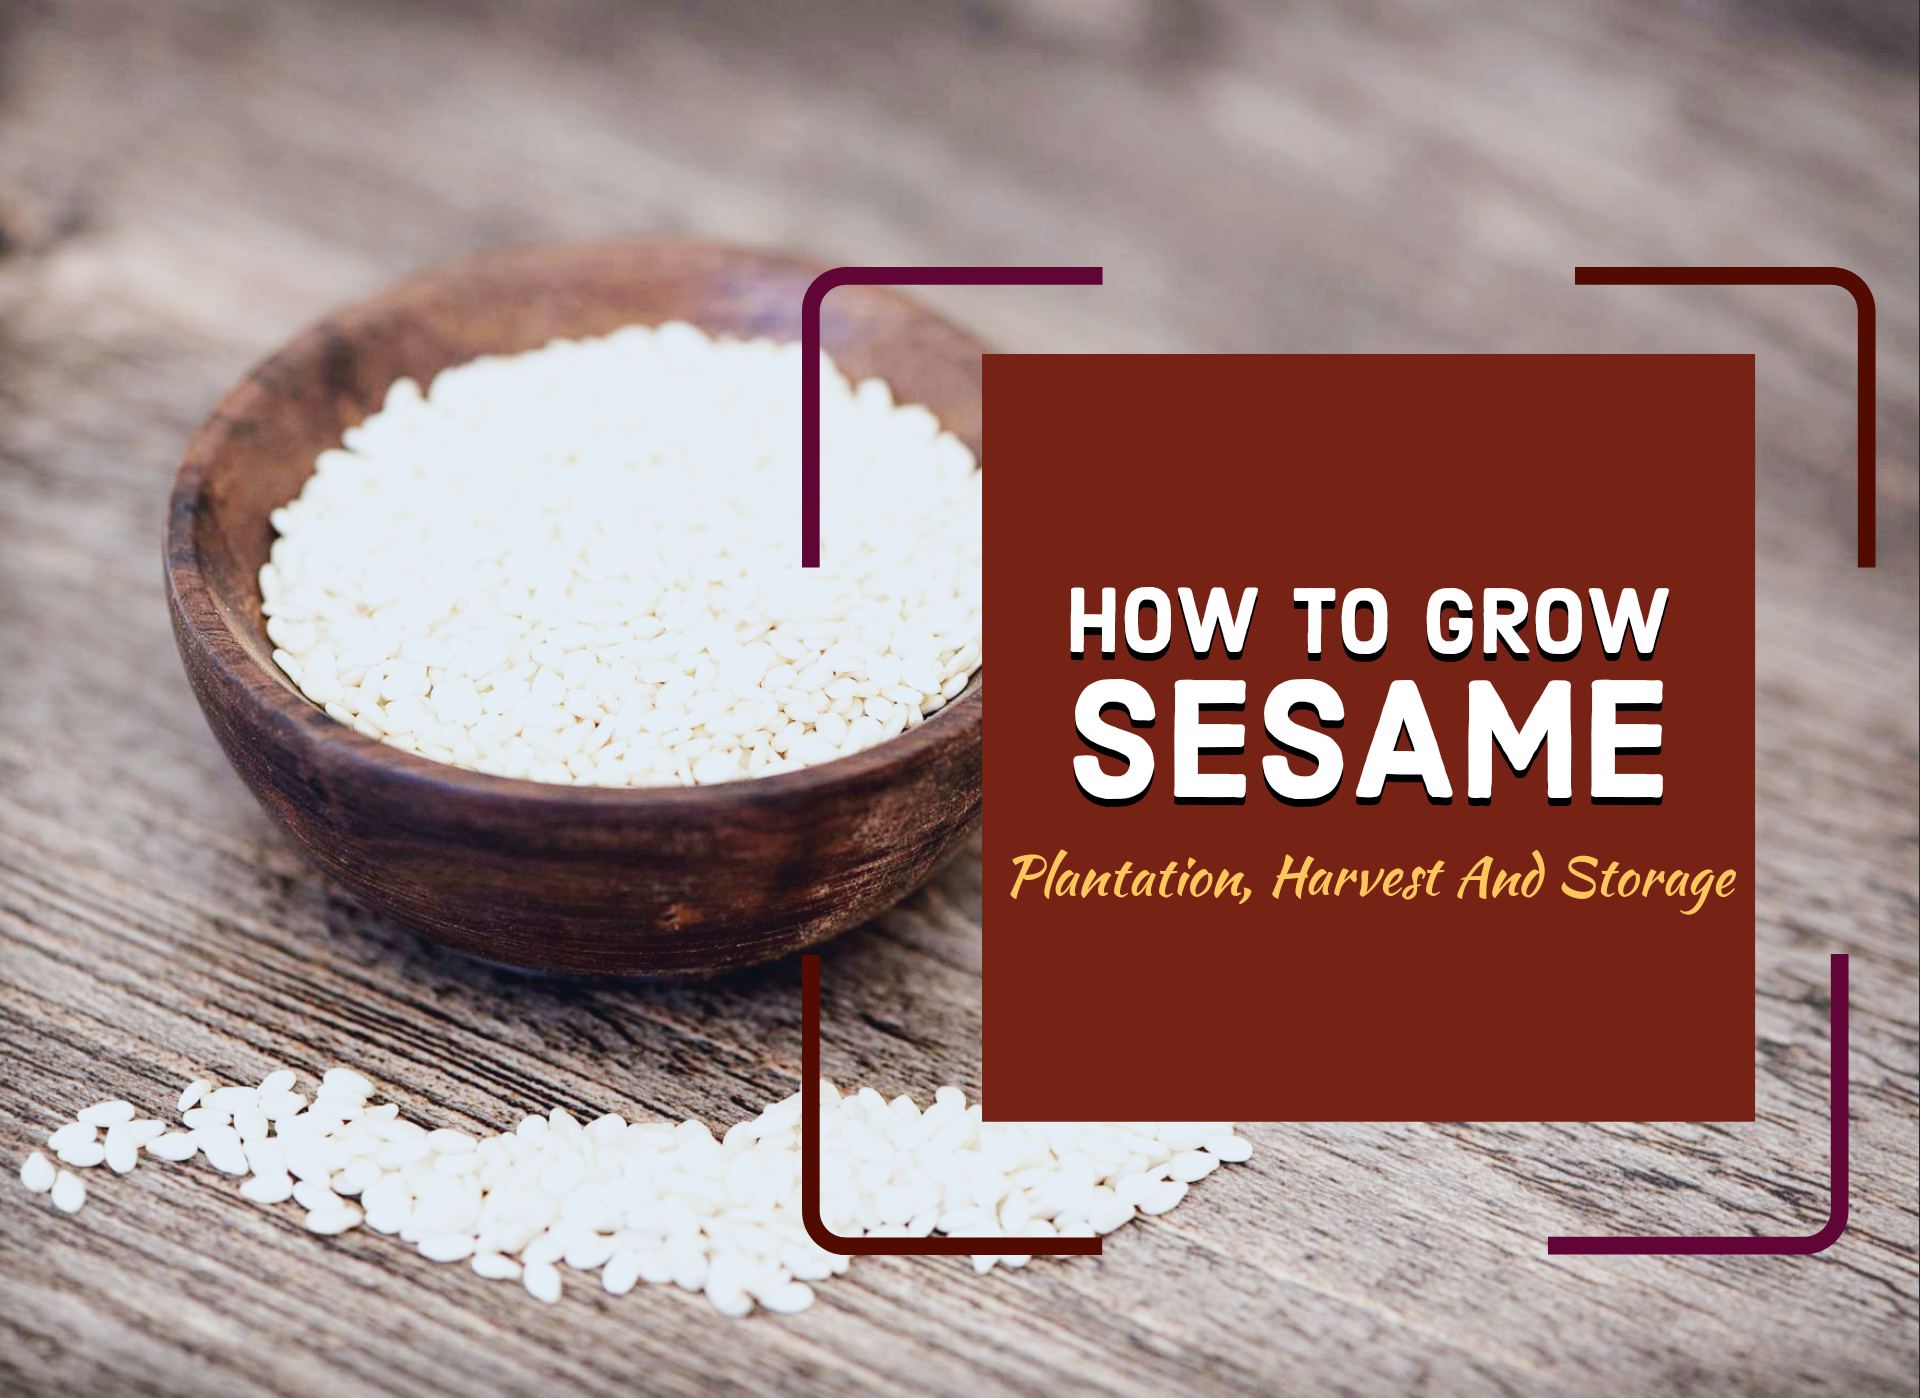 How To Grow Sesame: Plantation, Harvest and Storage